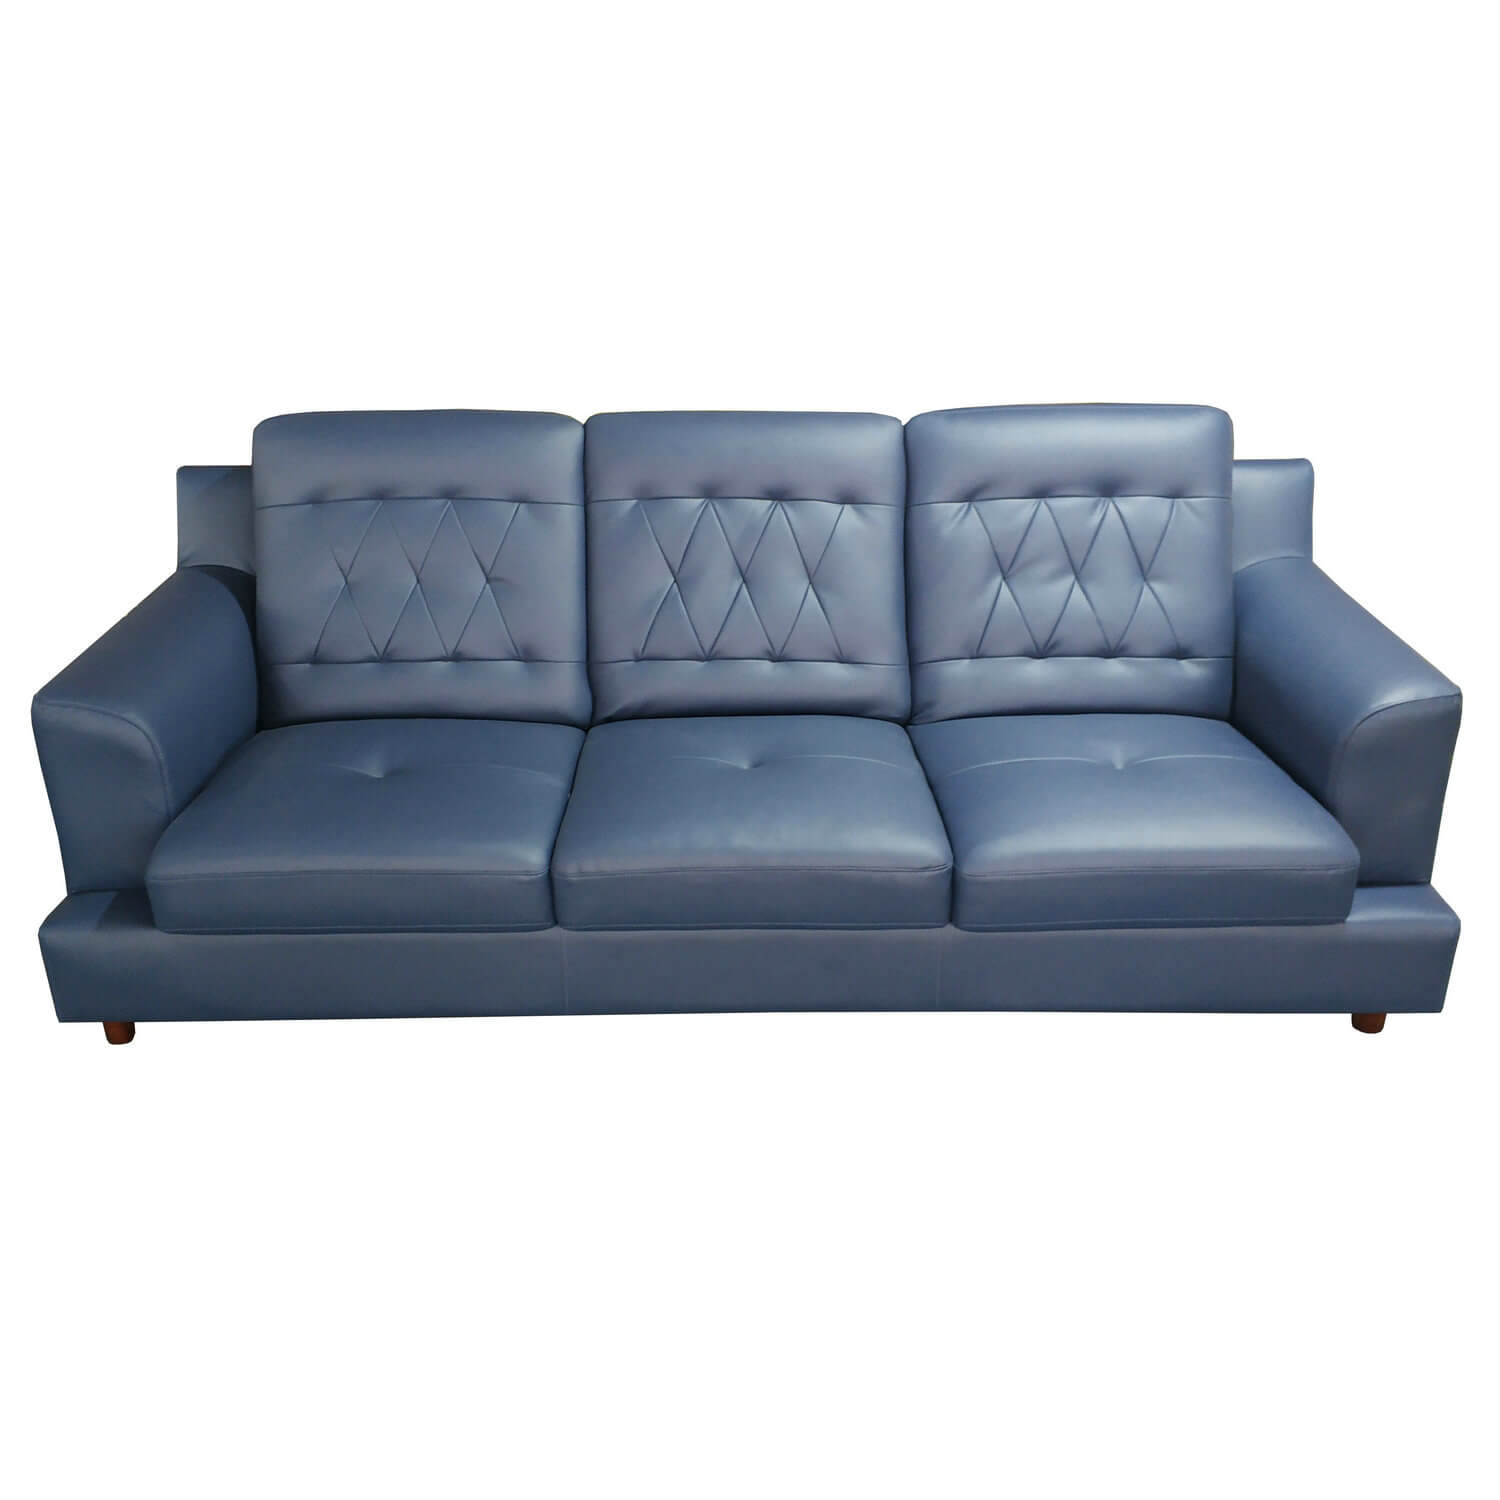 Charlotte Bronte werkloosheid Dom Navy Blue Leather Sofa - Foshan Kika Furniture Co., Ltd.